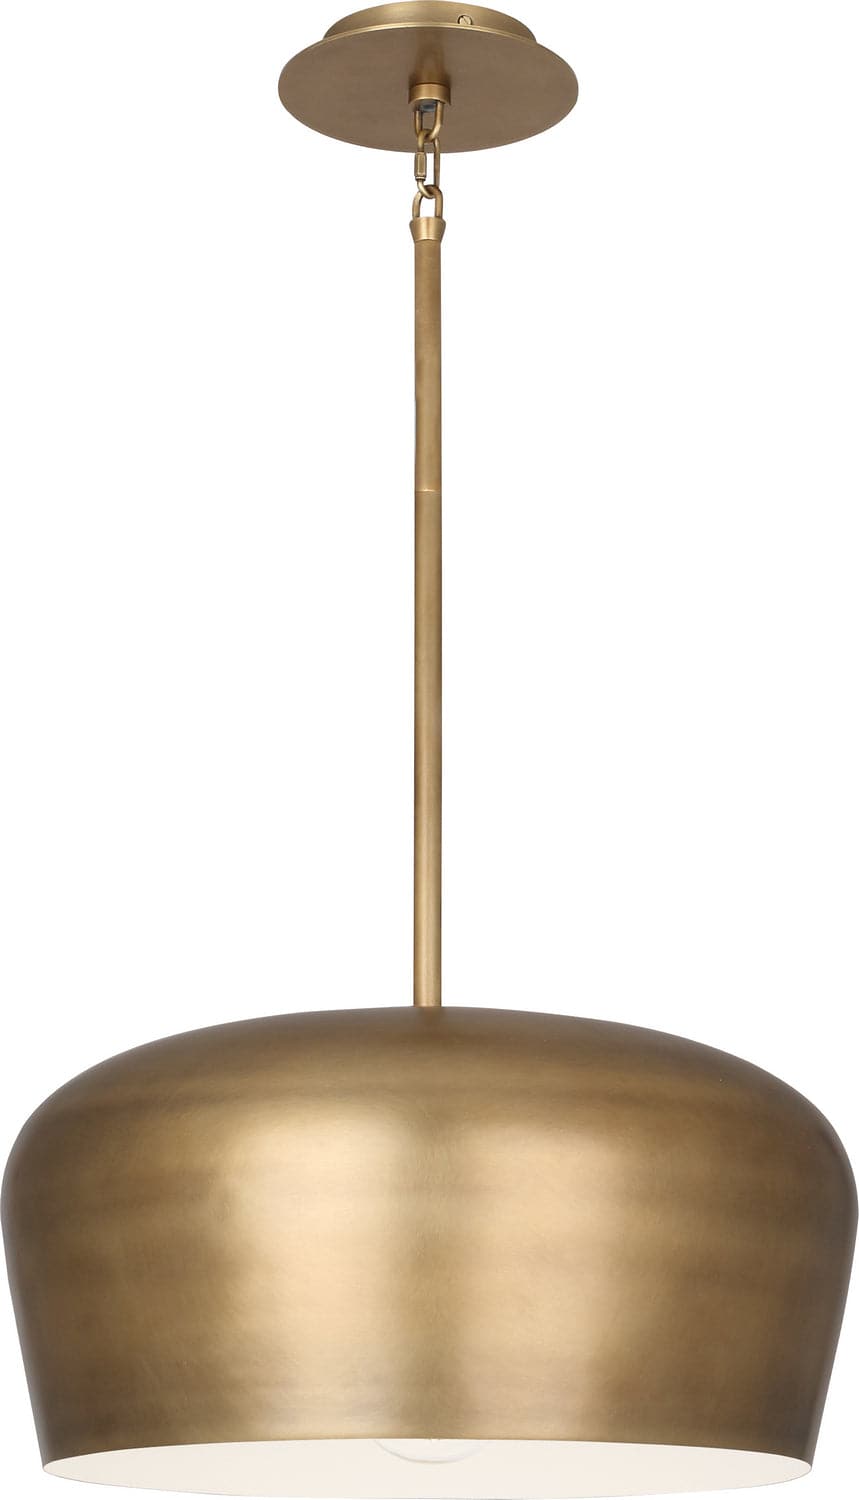 Robert Abbey - 610 - One Light Pendant - Rico Espinet Bumper - Warm Brass w/Painted White Shade Interior